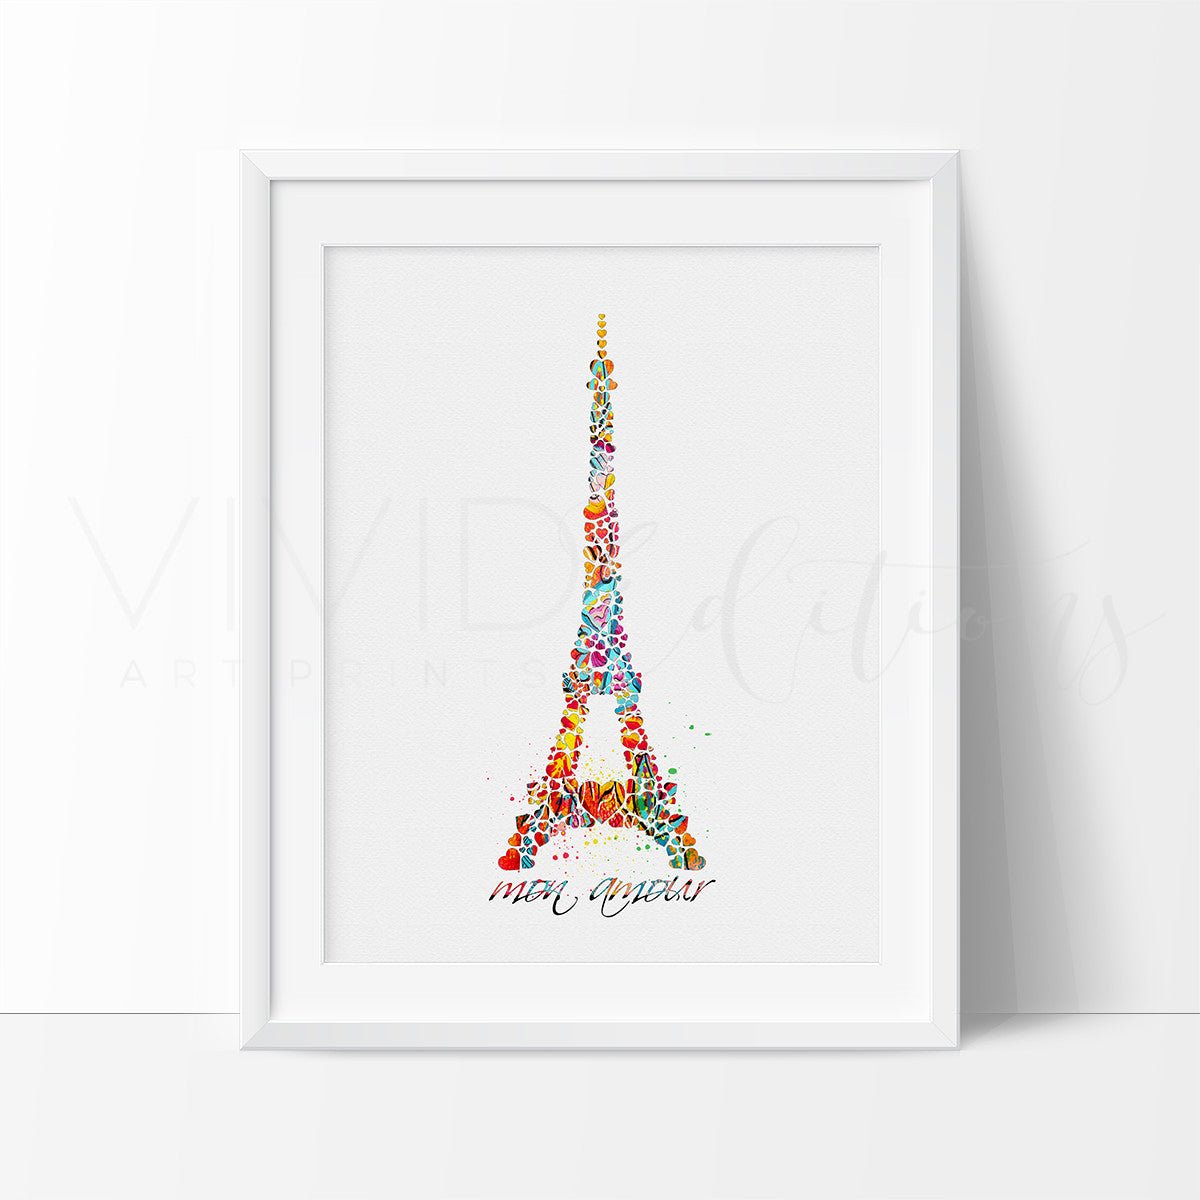 Eiffel Tower Paris, France Watercolor Art Print Print - VividEditions